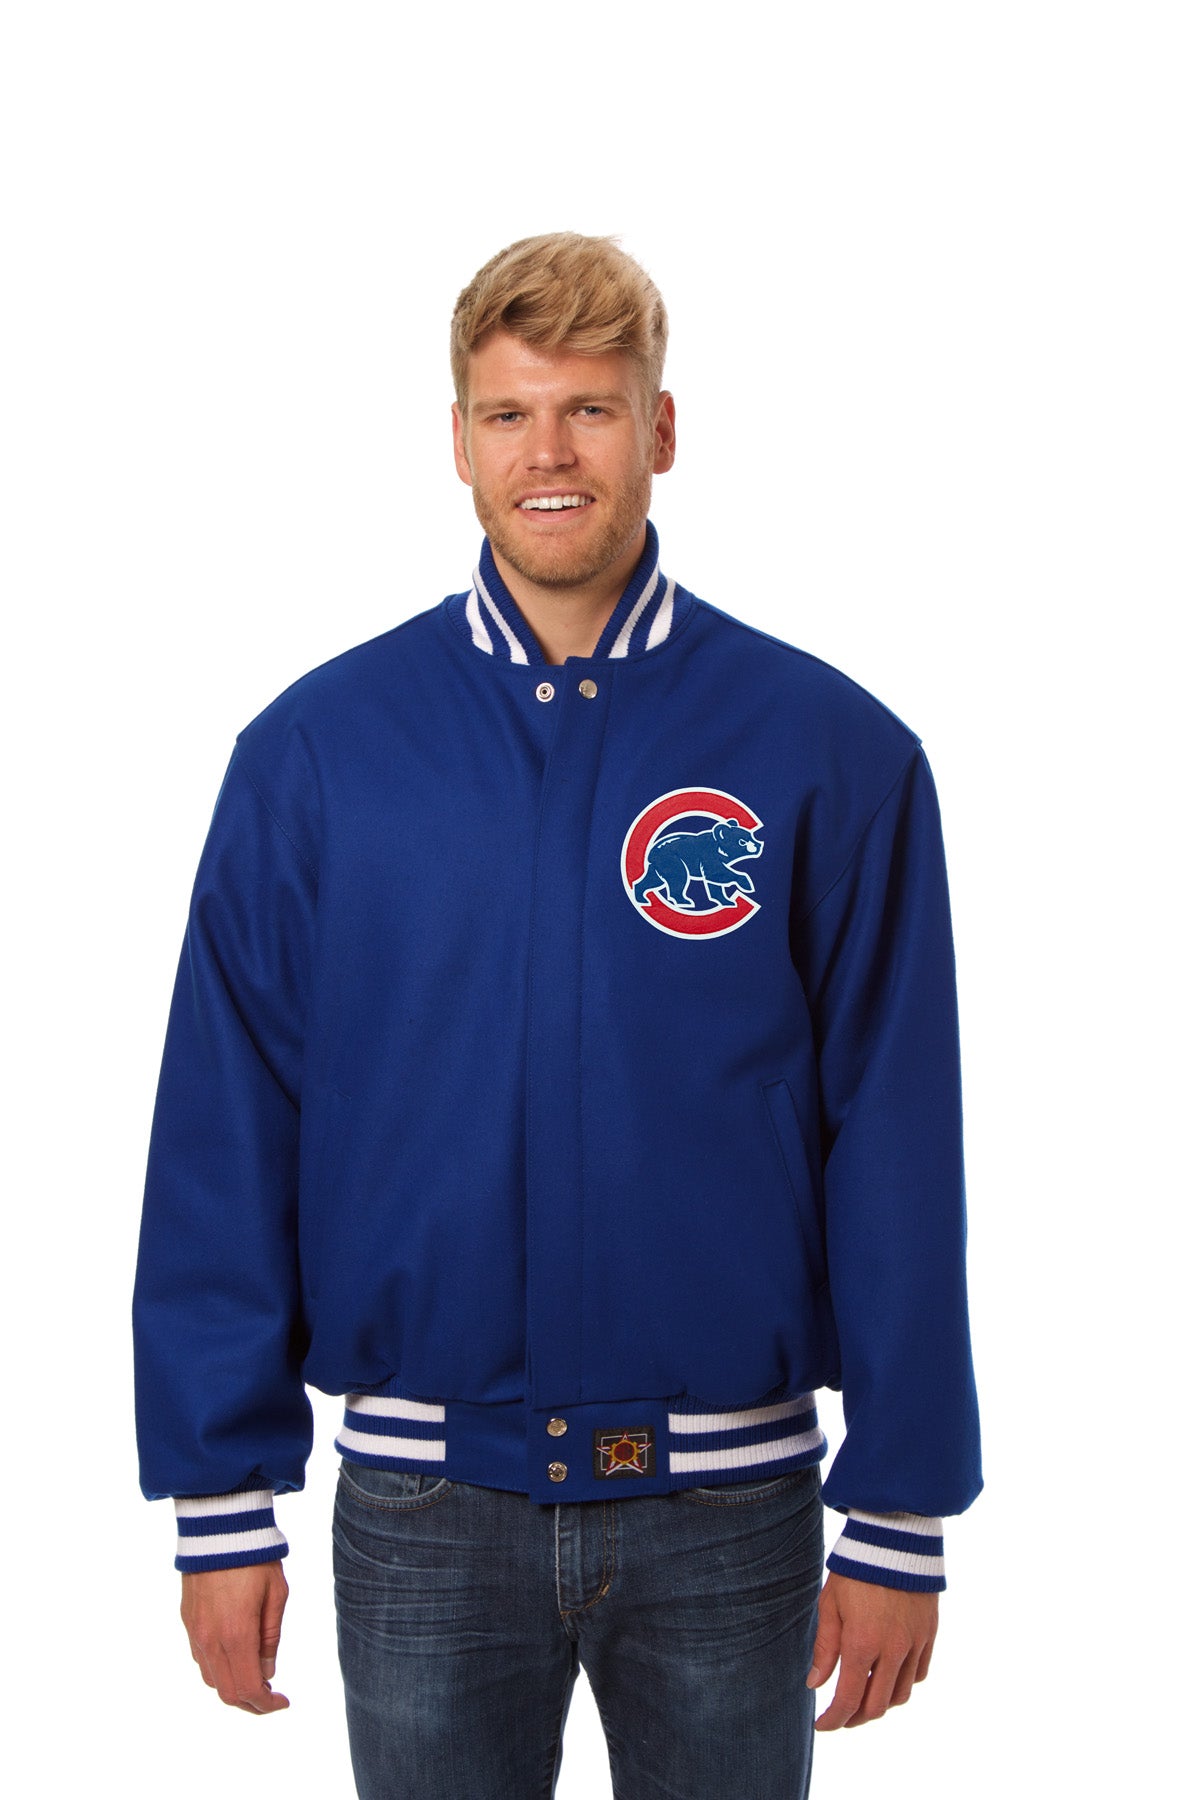 Maker of Jacket MLB Chicago Cubs Blue White Varsity